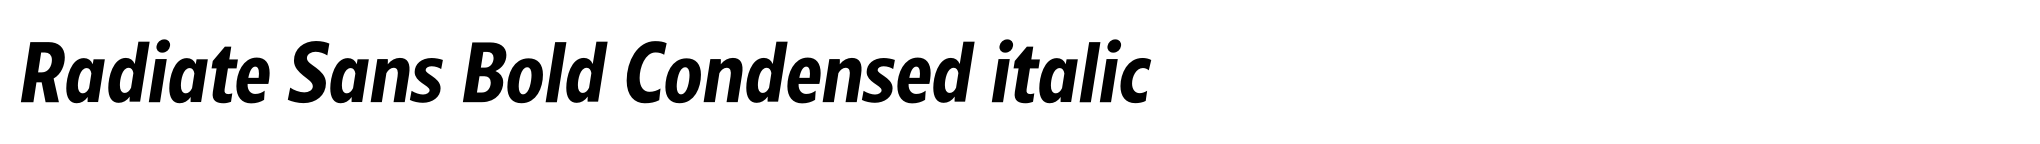 Radiate Sans Bold Condensed italic image